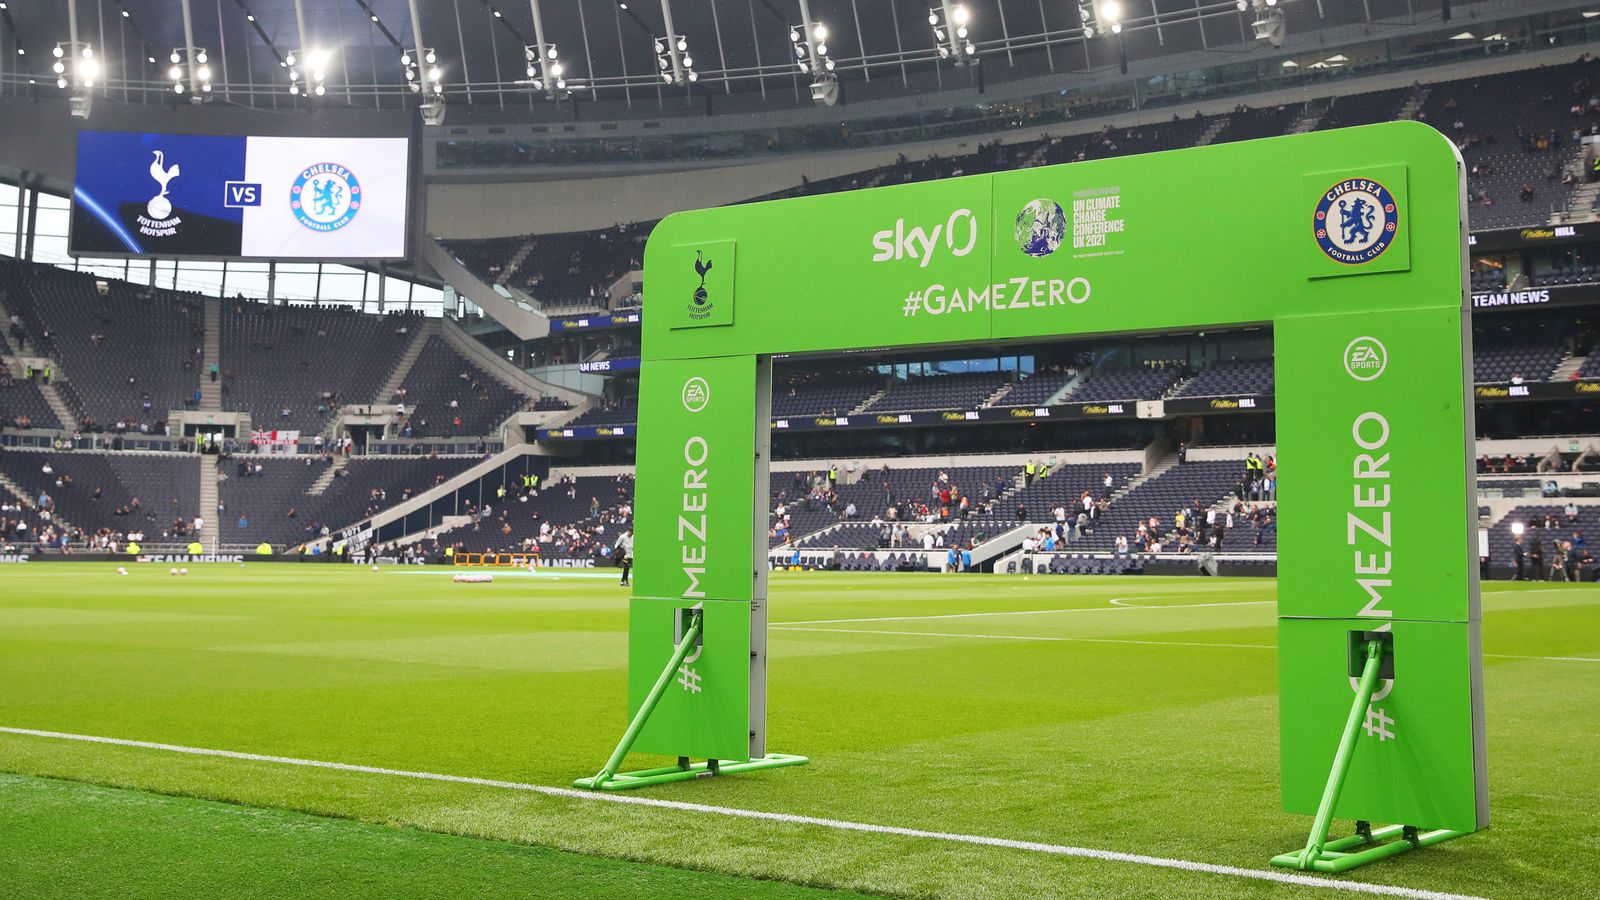 Game Zero: Tottenham 0-3 Chelsea achieves net-zero carbon emissions, according to Sky study